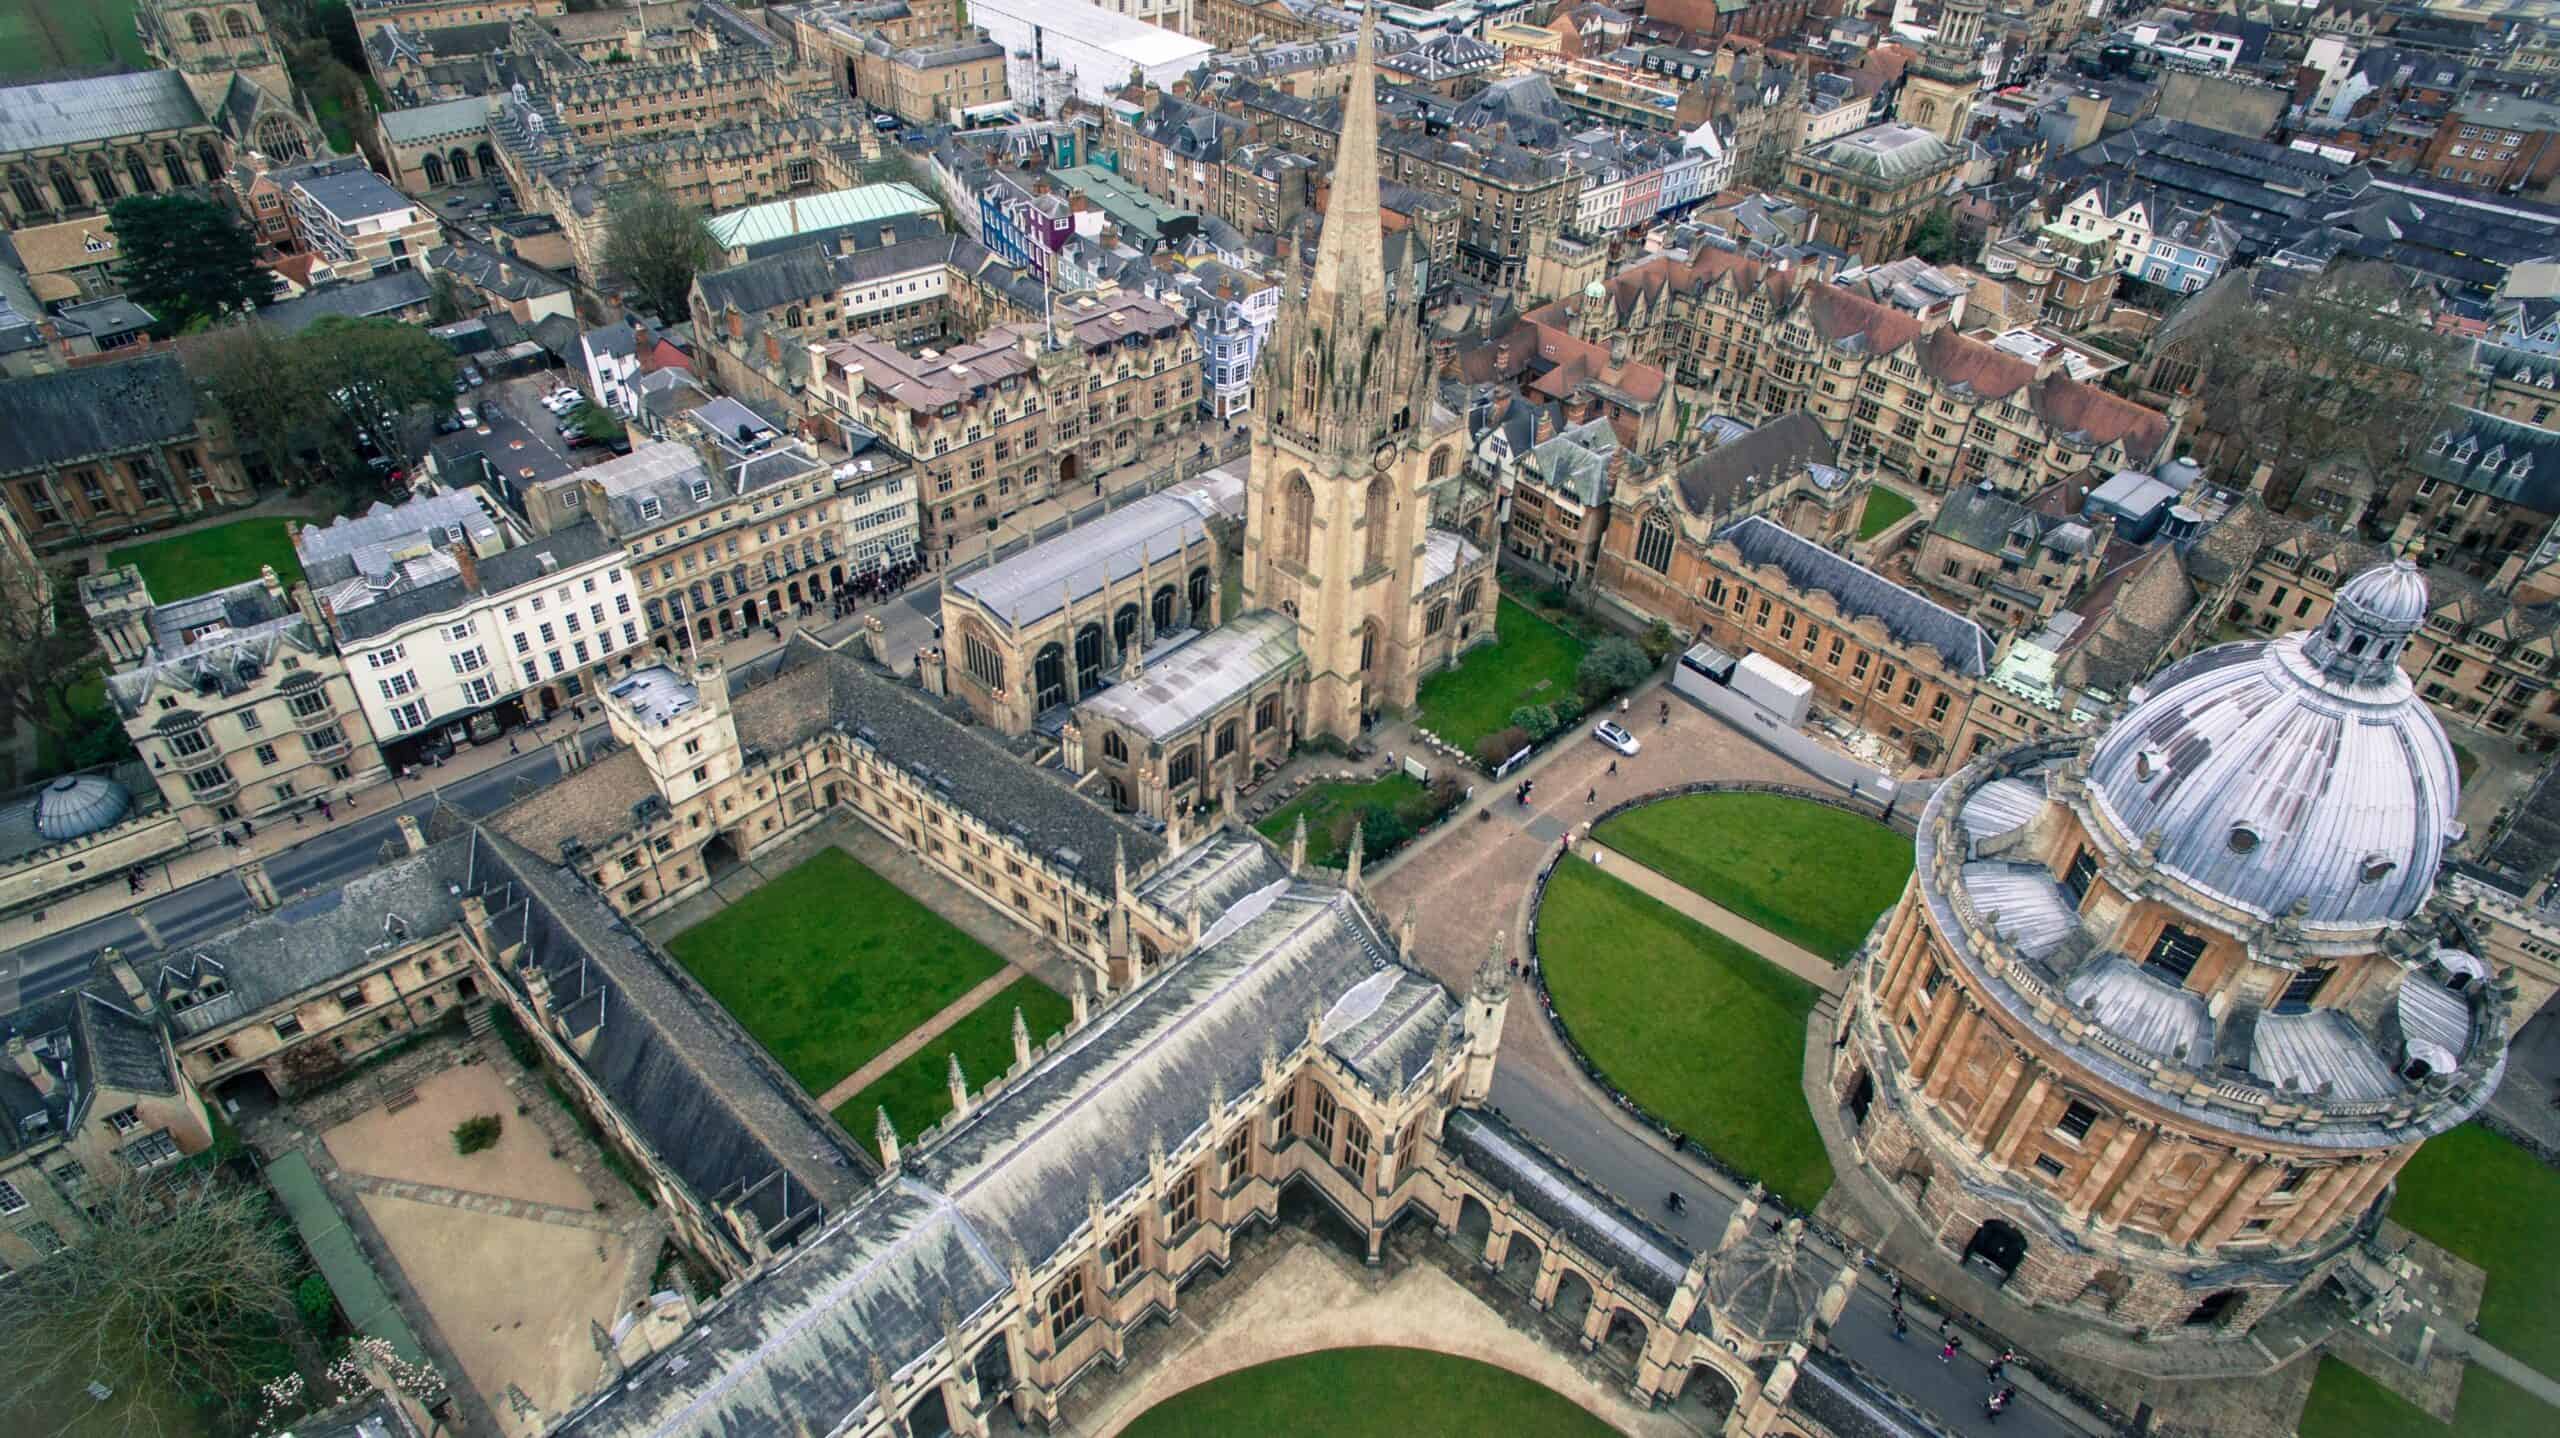 The University of Oxford Revenue Statistics